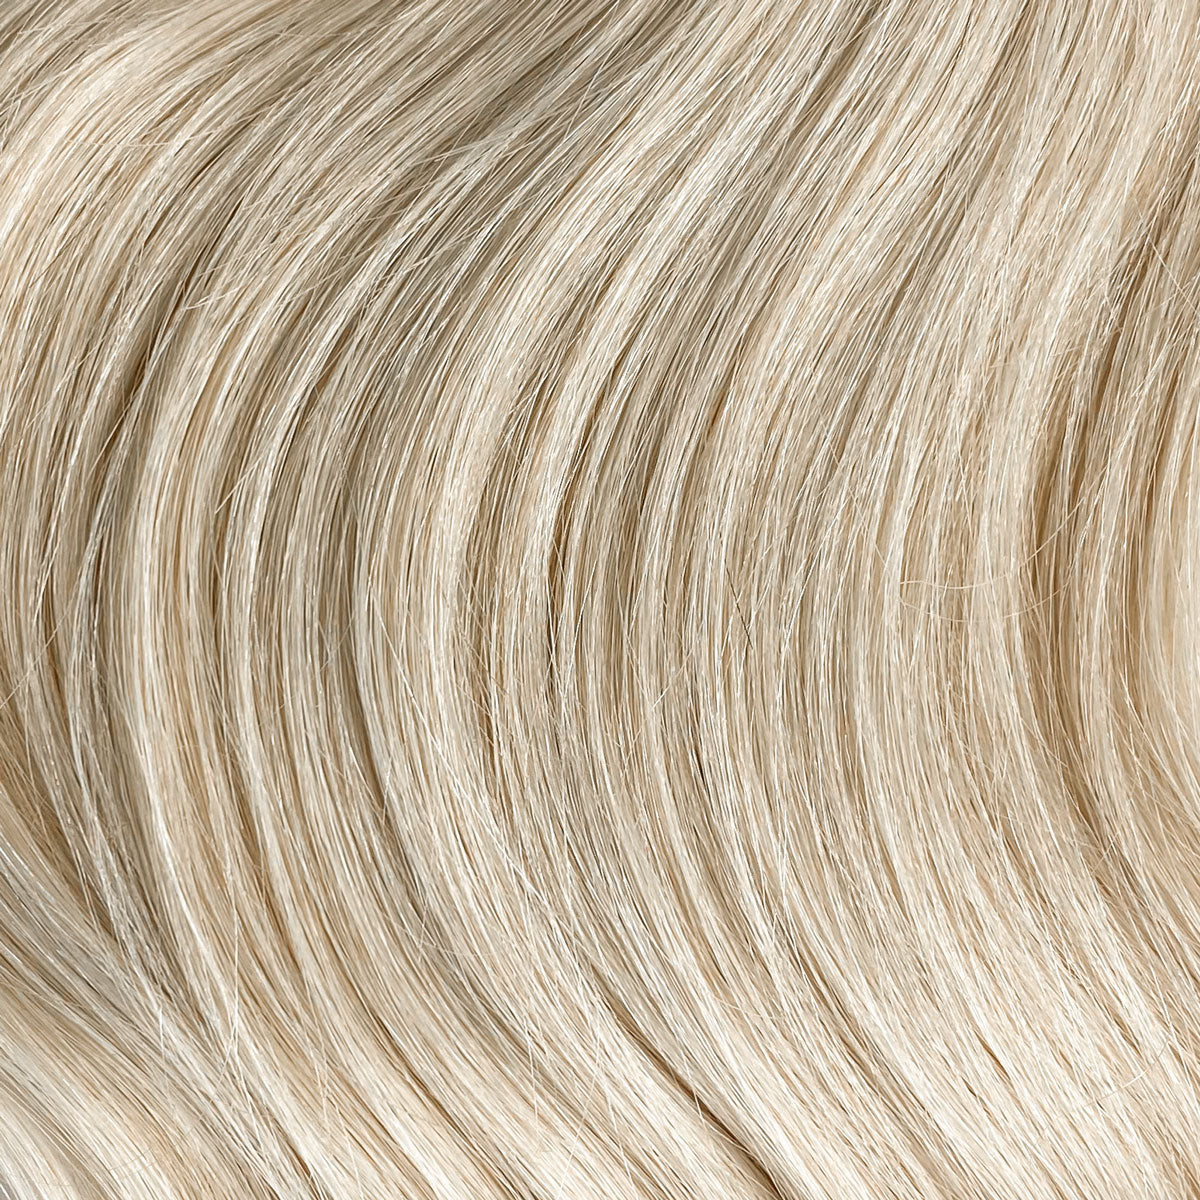 Clip In Hair Extensions 24" #60b Vanilla Blonde